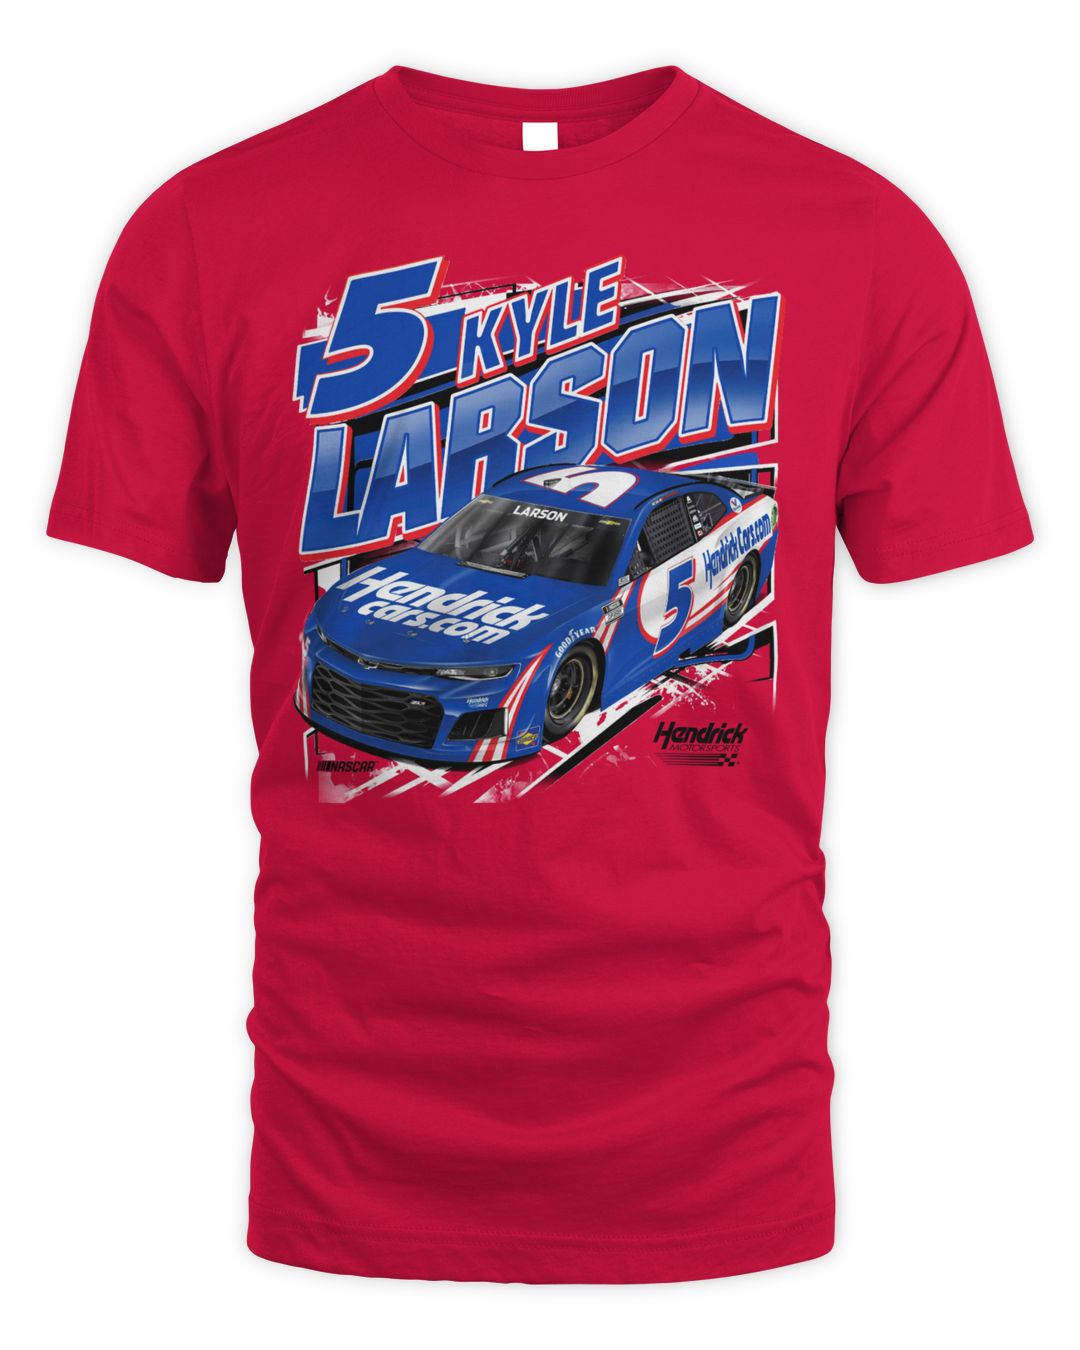 Kyle Larson Hendrick Motorsports Team Collection 1-Spot Graphic Shirt